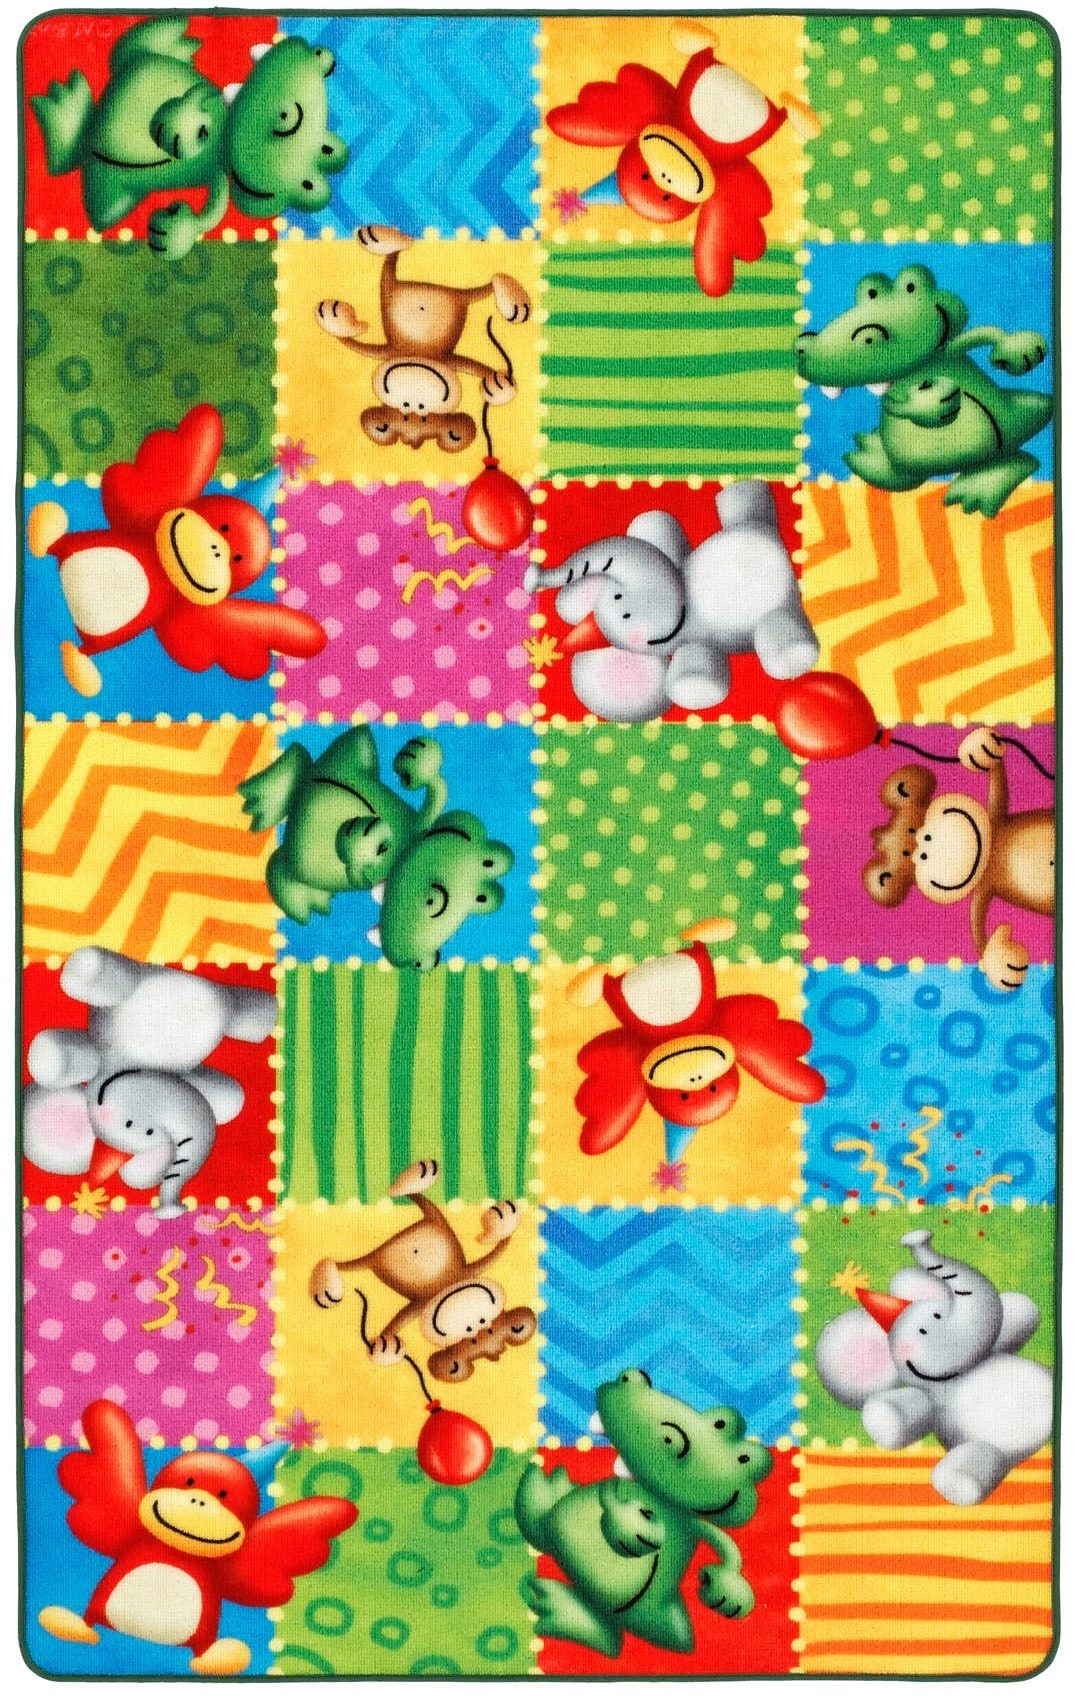 Böing Carpet Fußmatte »Lovely Kids LK-5«, rechteckig, Schmutzfangmatte,  Druckteppich, Motiv Zootiere, Kinderzimmer | Flachgewebe-Teppiche